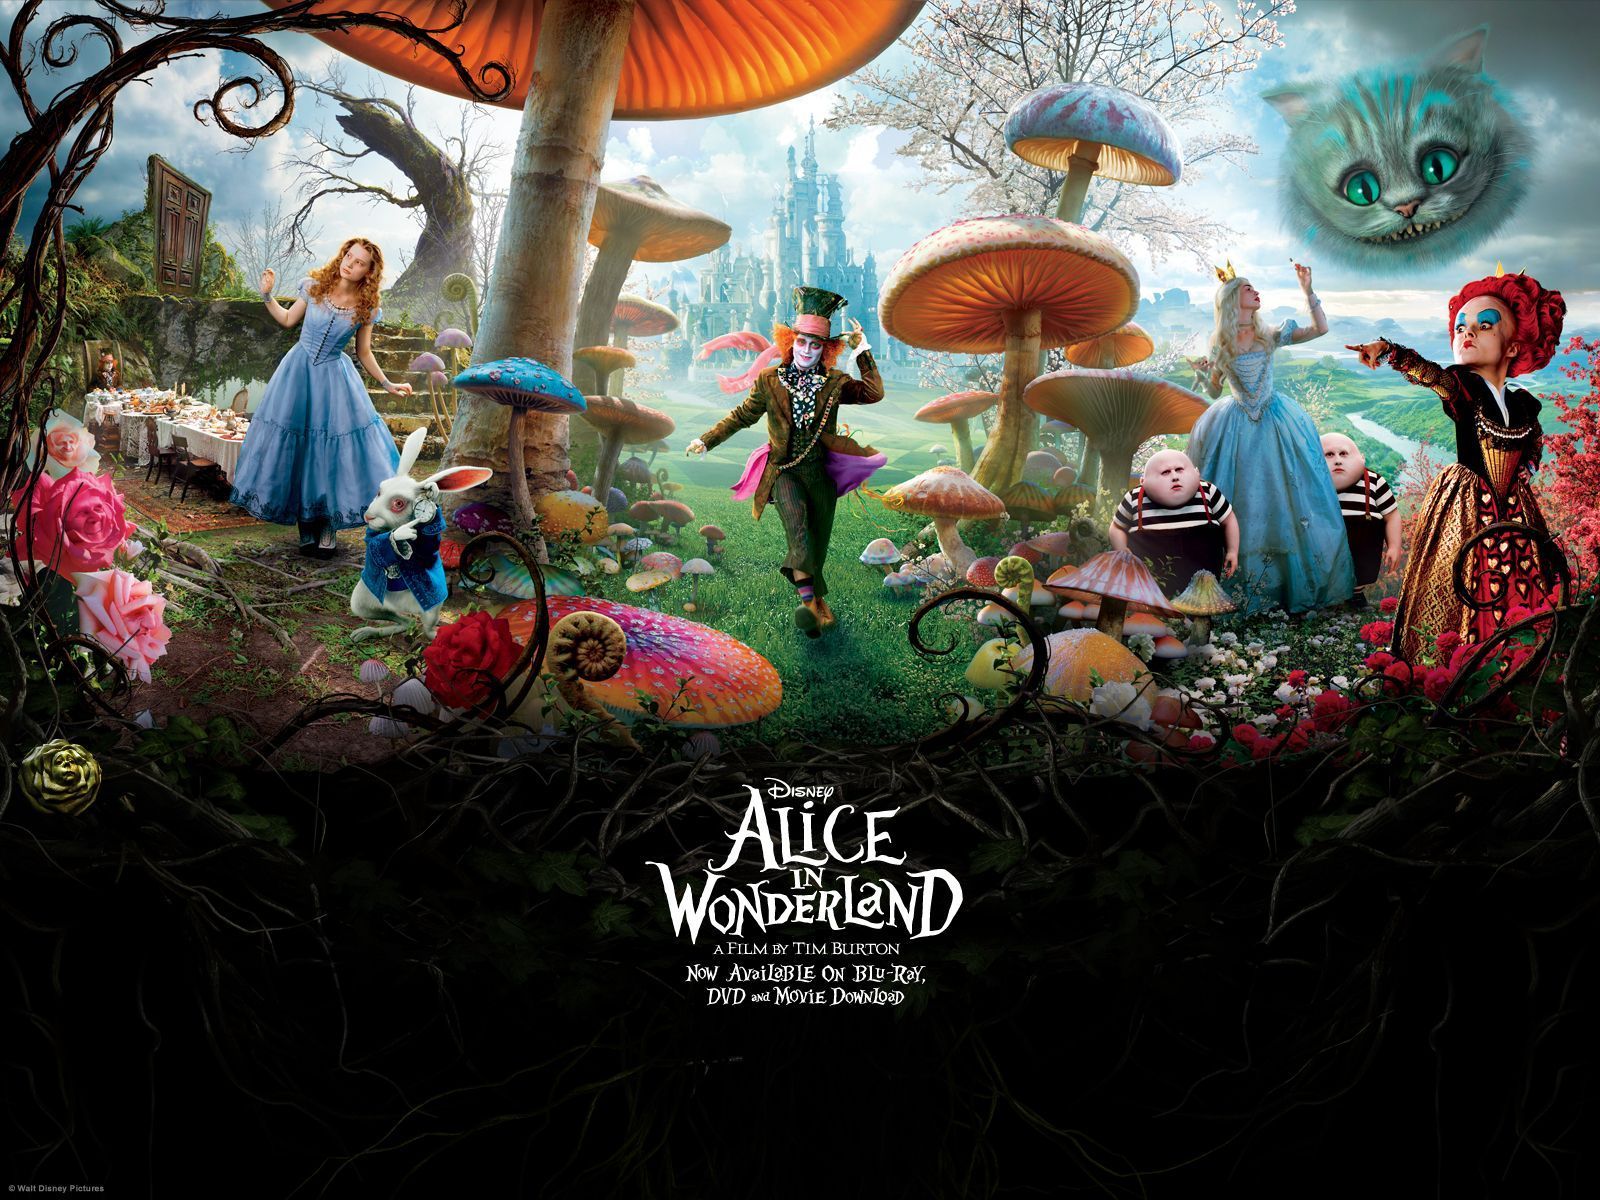 Alice in Wonderland wallpaper - Tim Burton Wallpaper 18698658